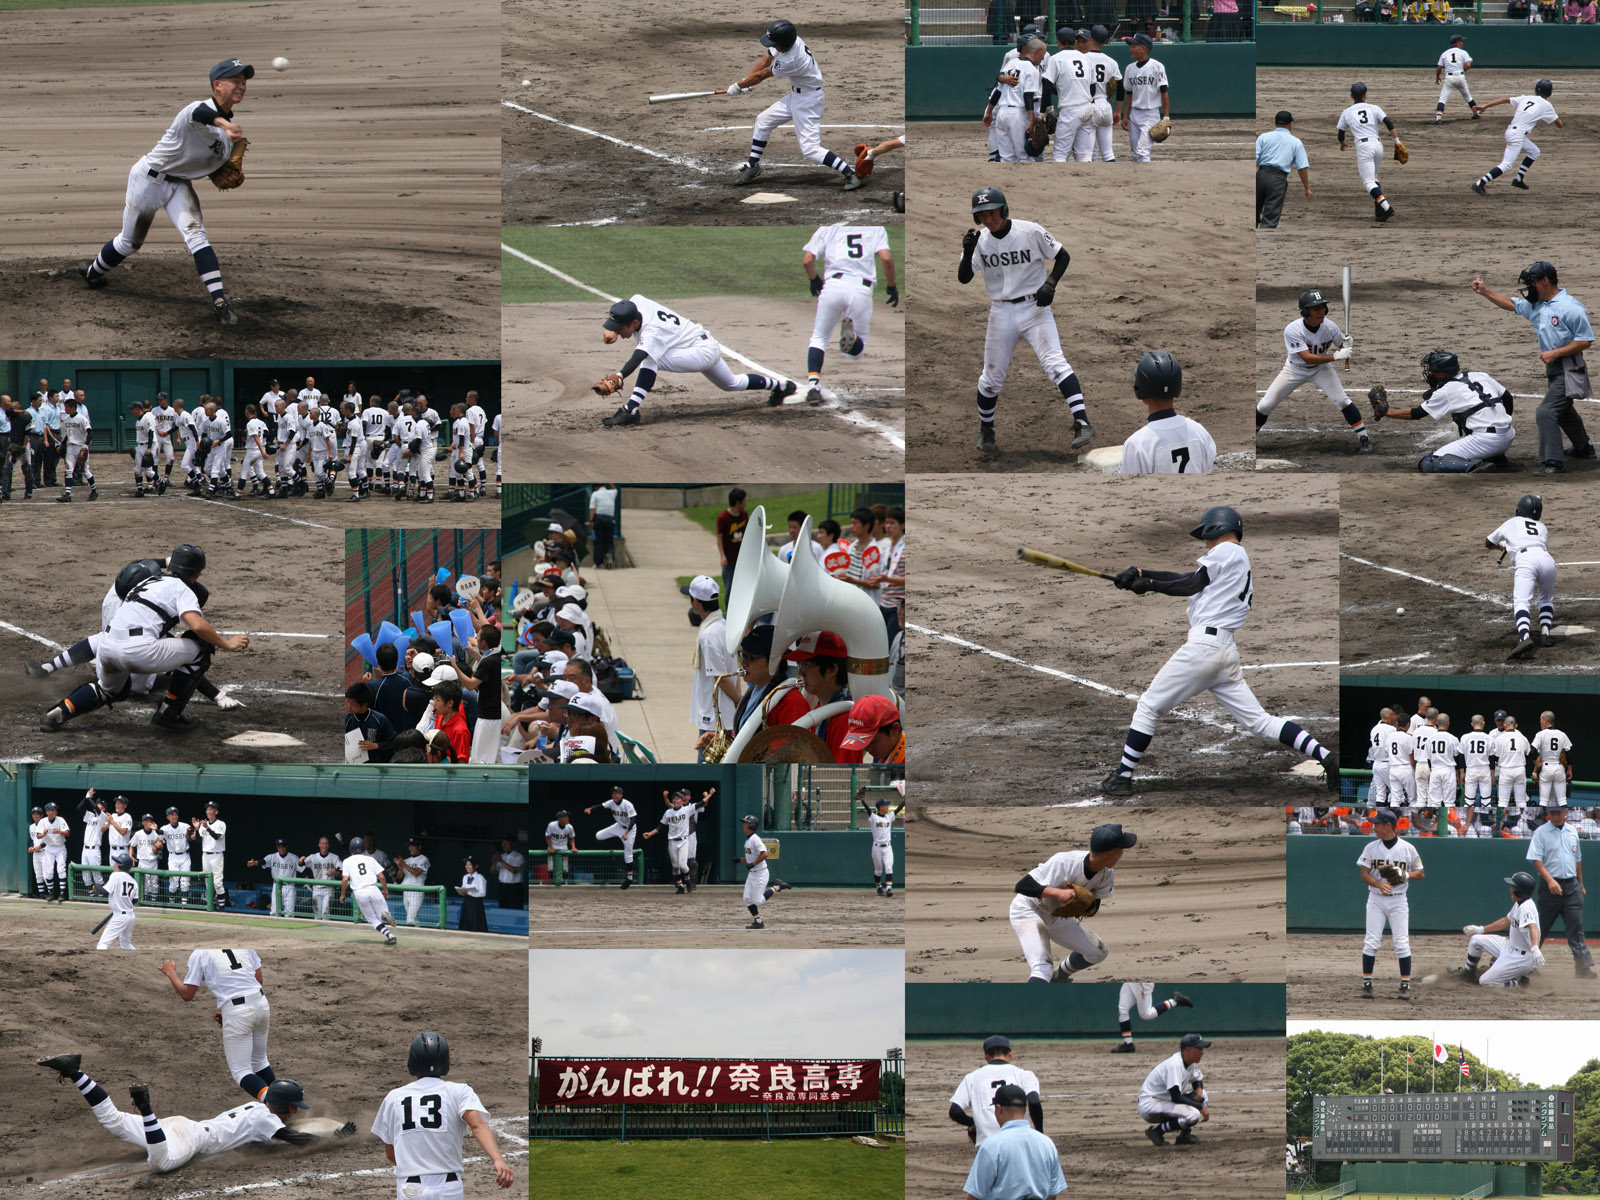 Baseball Club, Nara National College of Technologyon July/11/2015